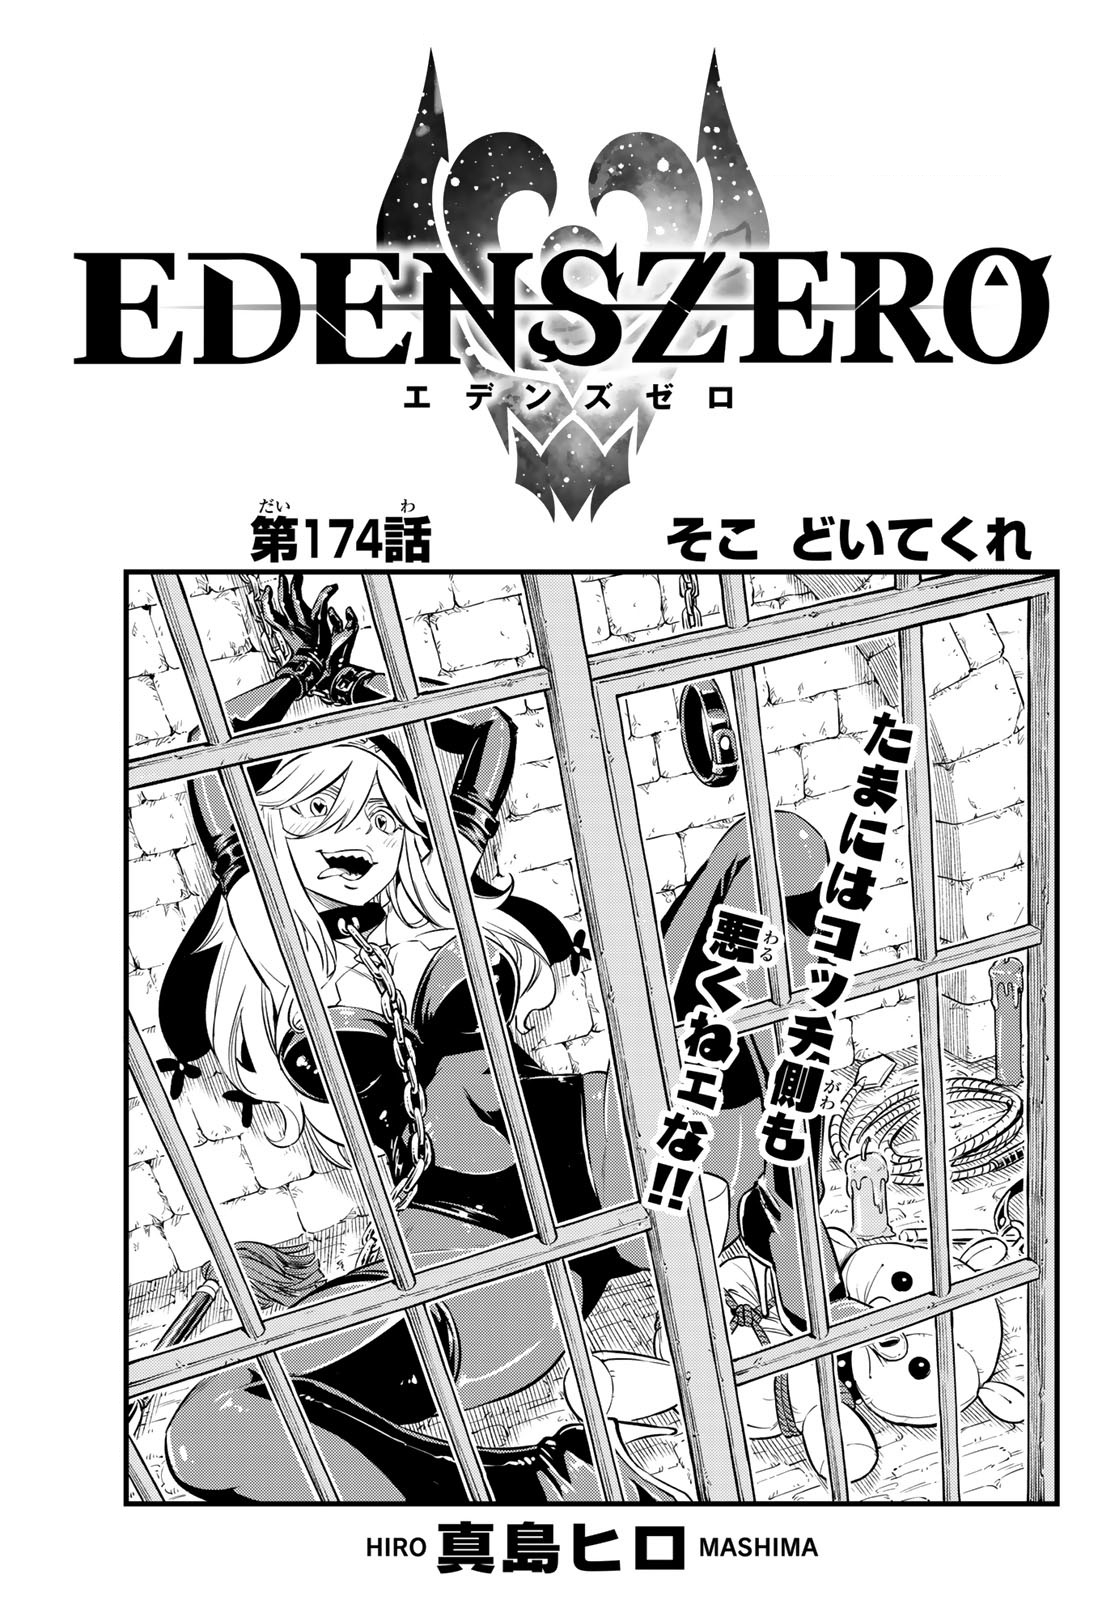 EDENS ZERO, Volume 3